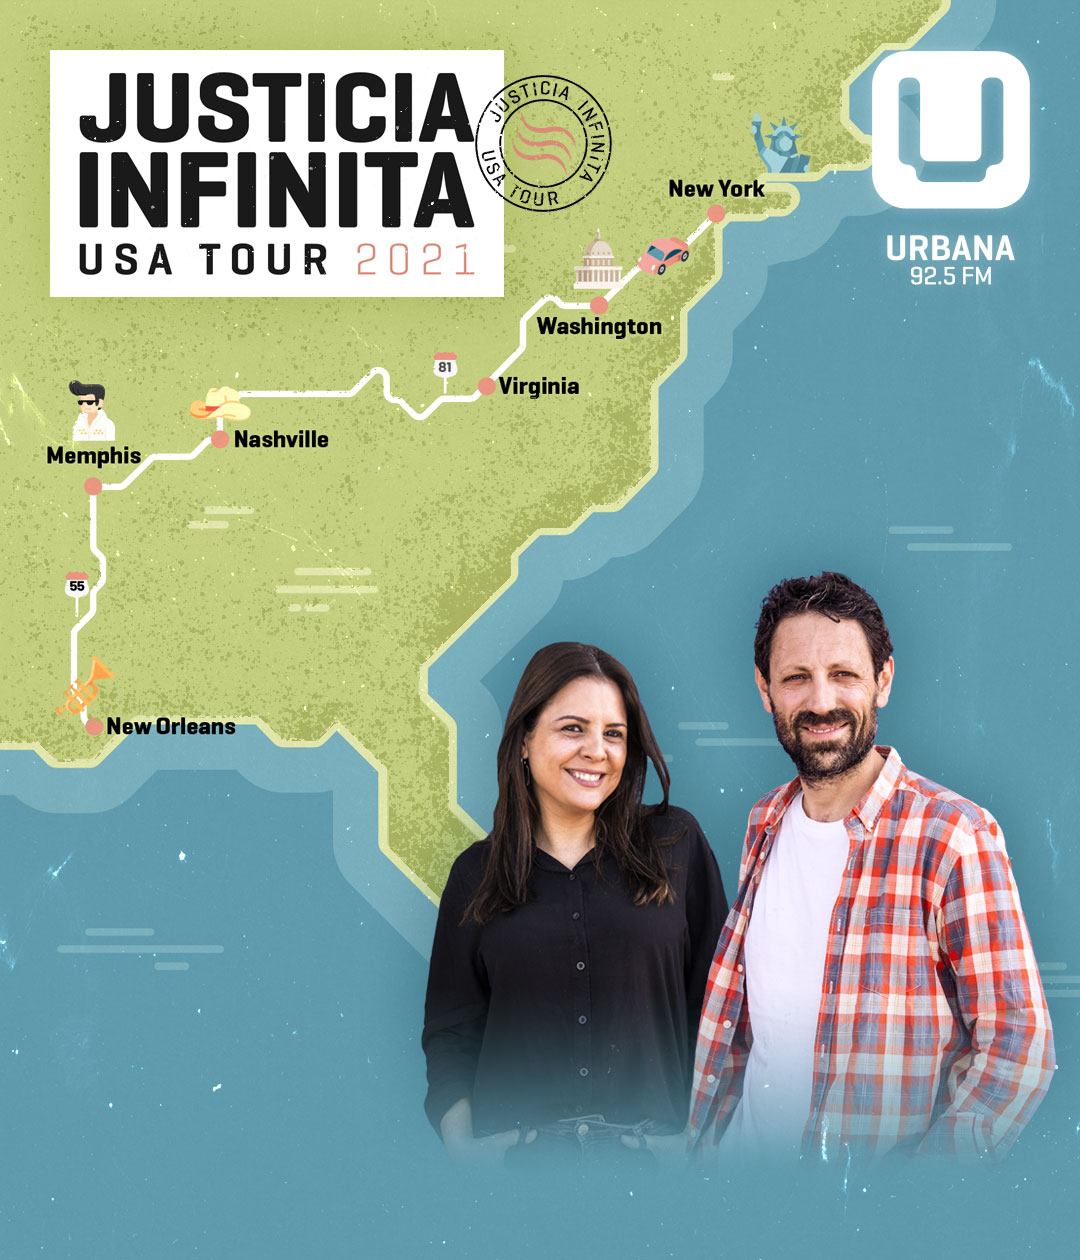 Justicia Infinita: USA tour 2021